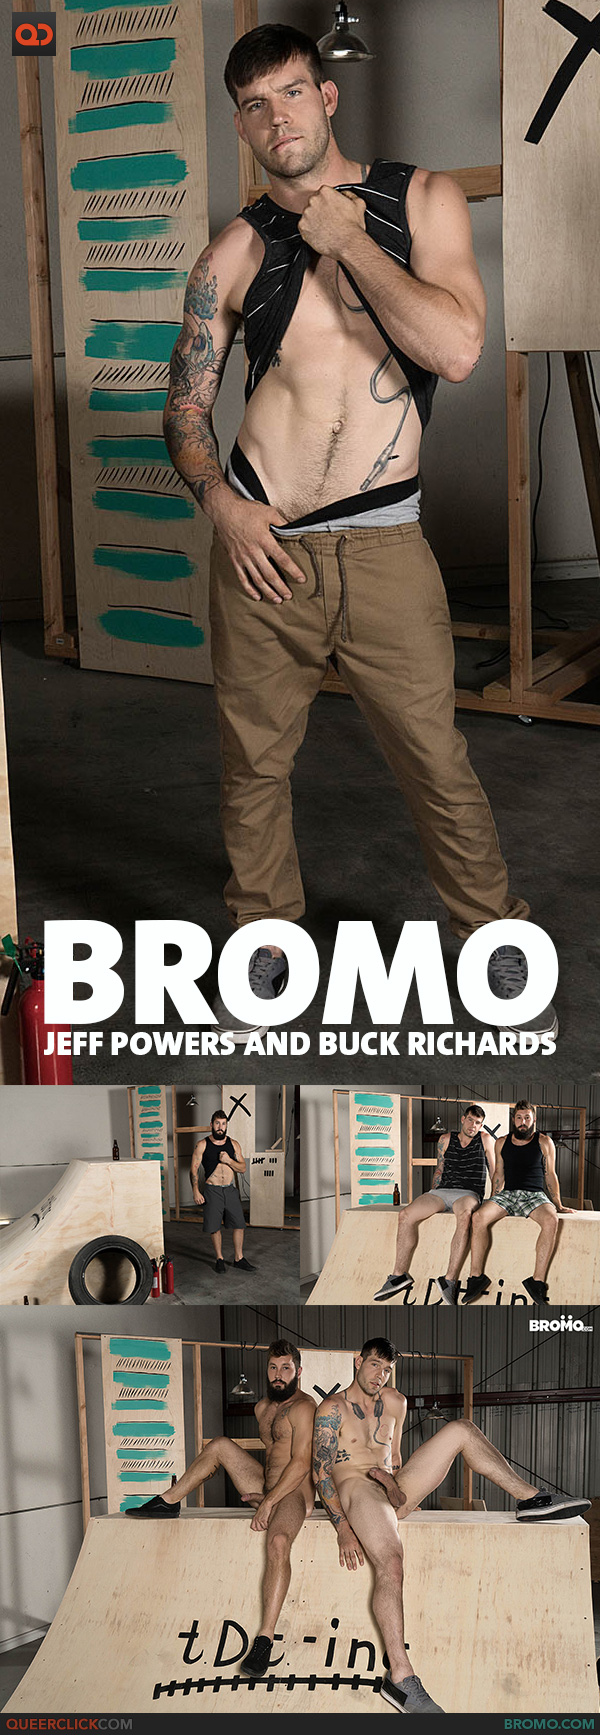 Bromo:  Jeff Powers and Buck Richards